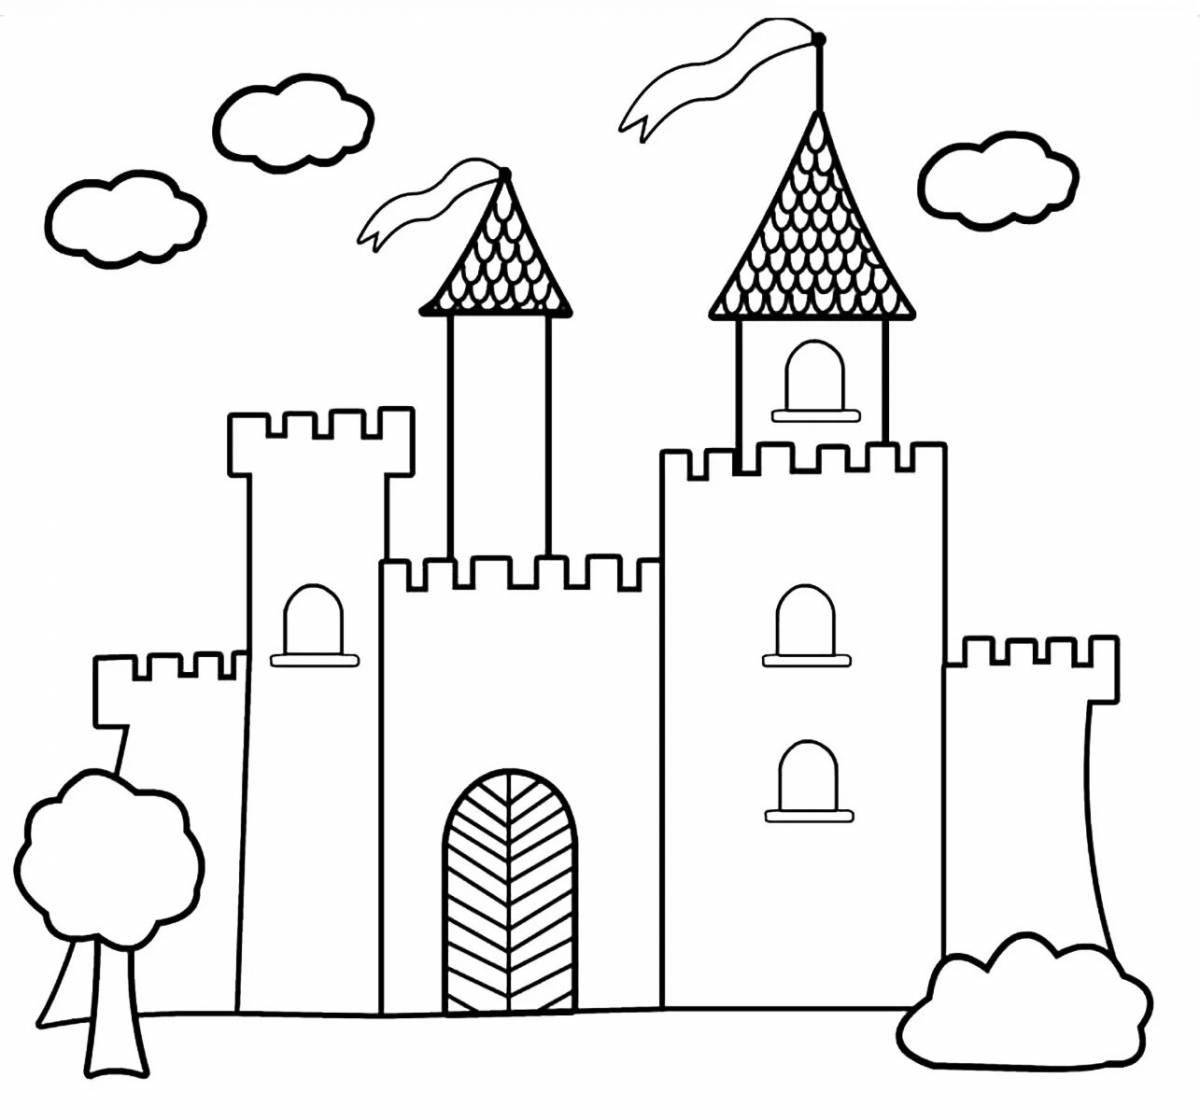 Impressive castle coloring pages for kids